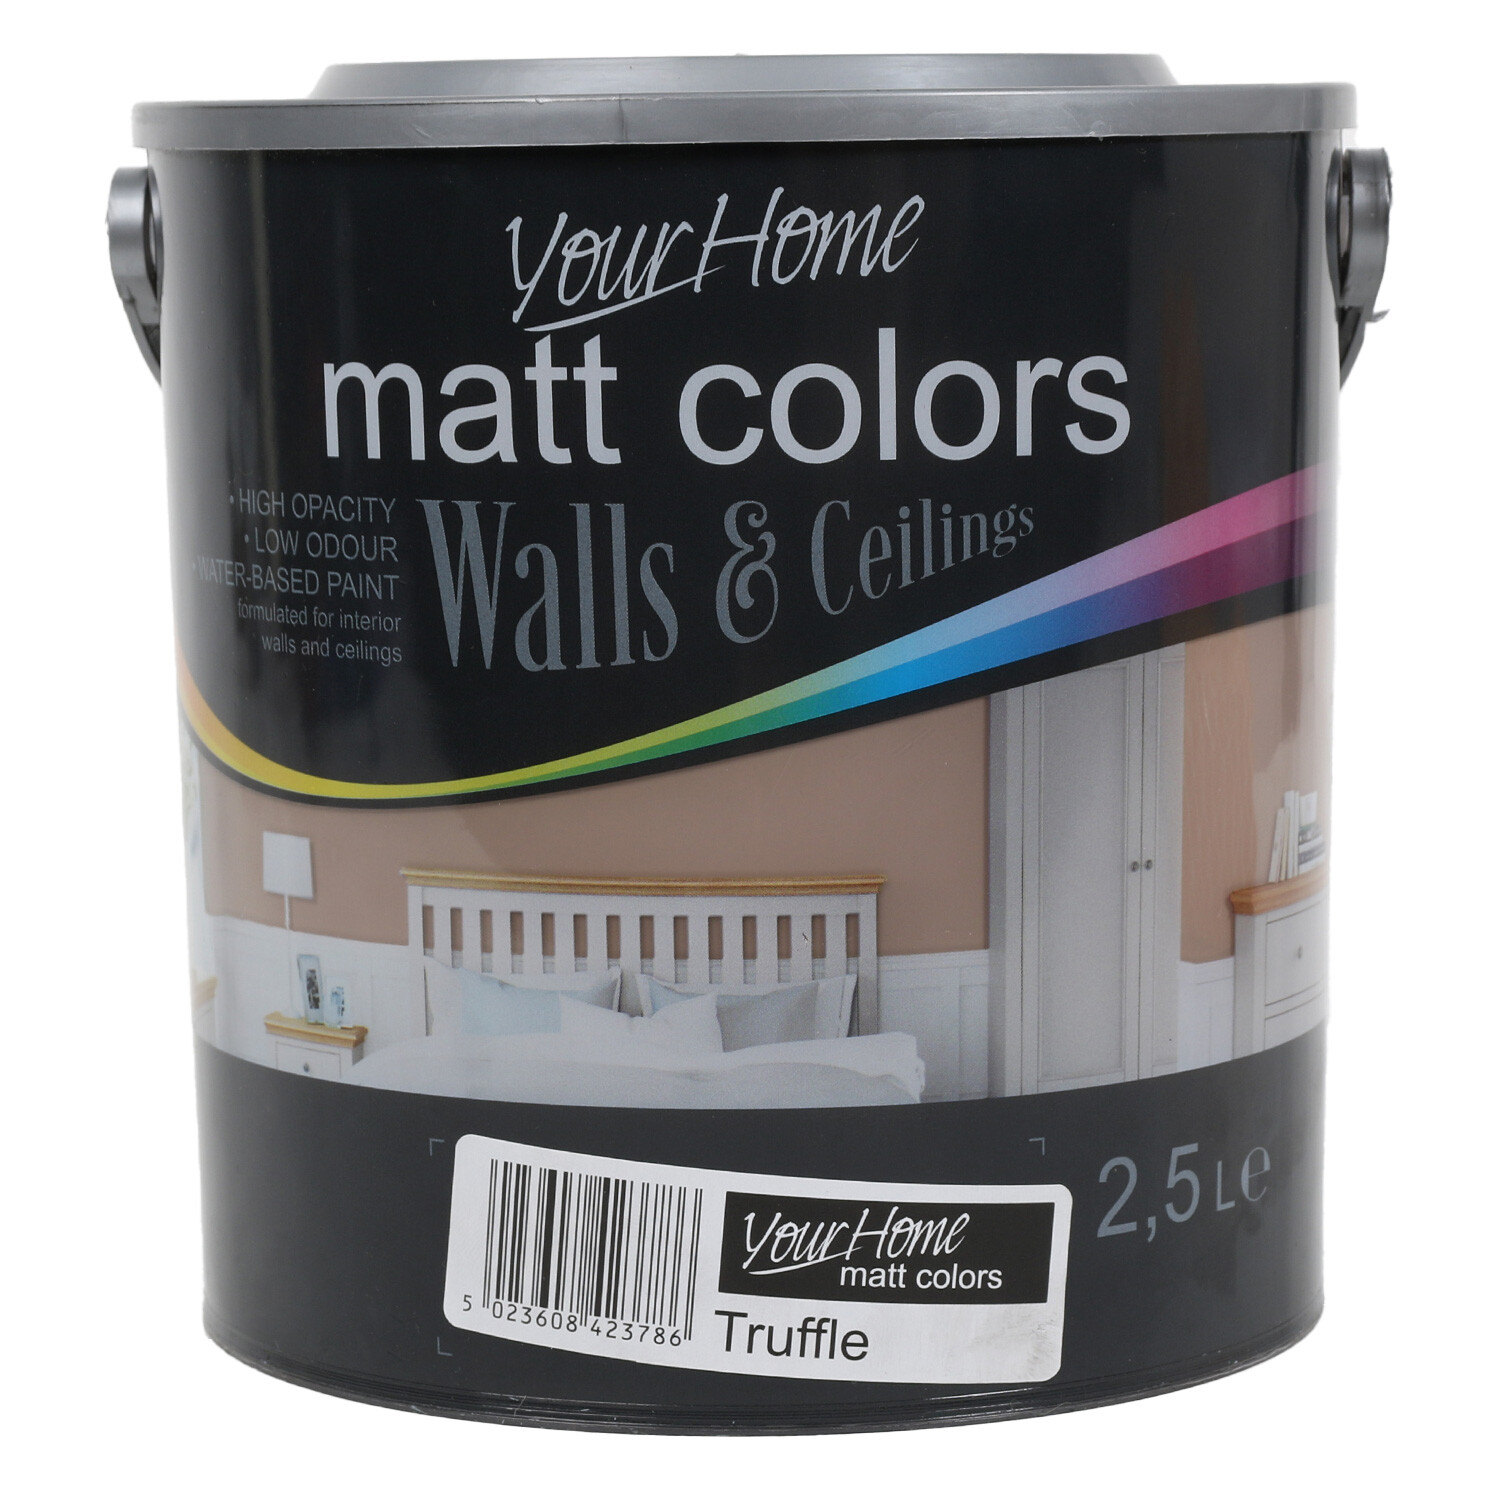 Your Home Walls & Ceilings Truffle Matt Emulsion Paint 2.5L Image 1